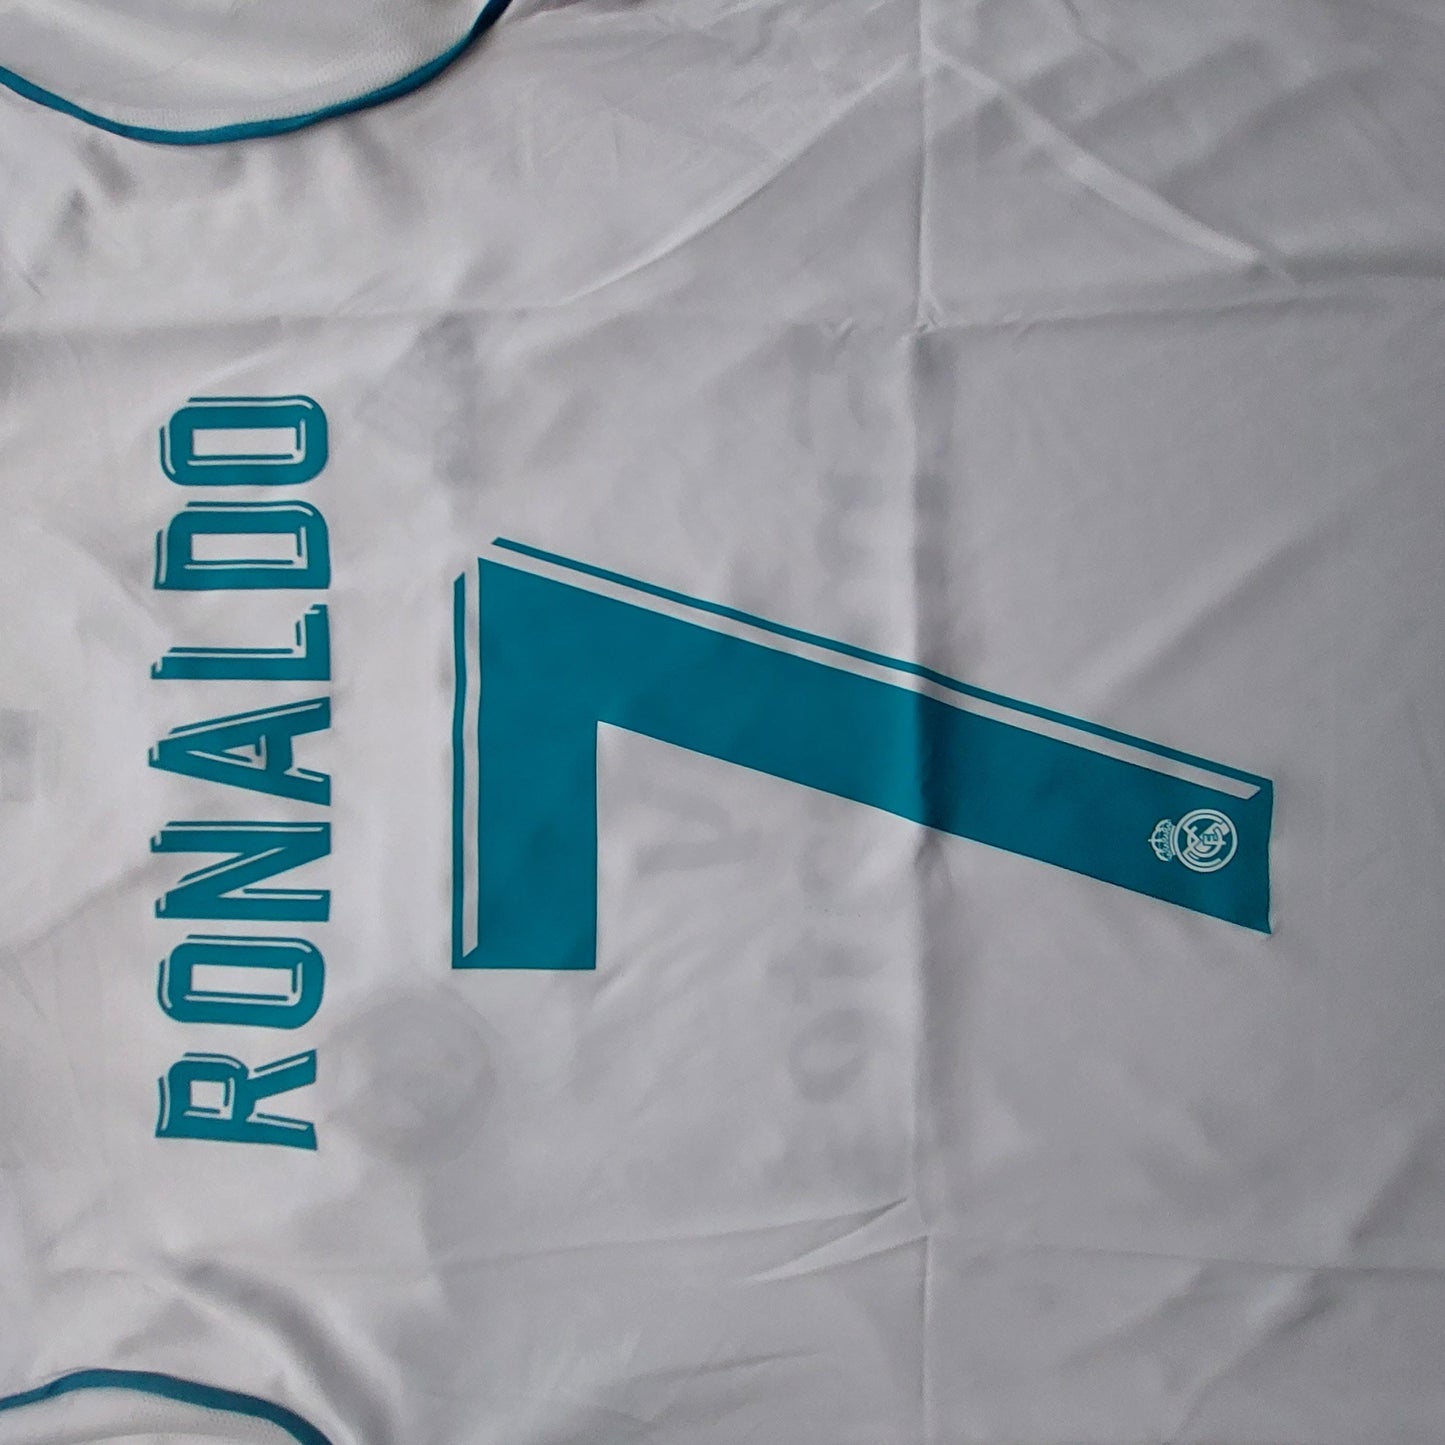 Ronaldo Real Madrid 2017/2018 Champion League Final Shirt